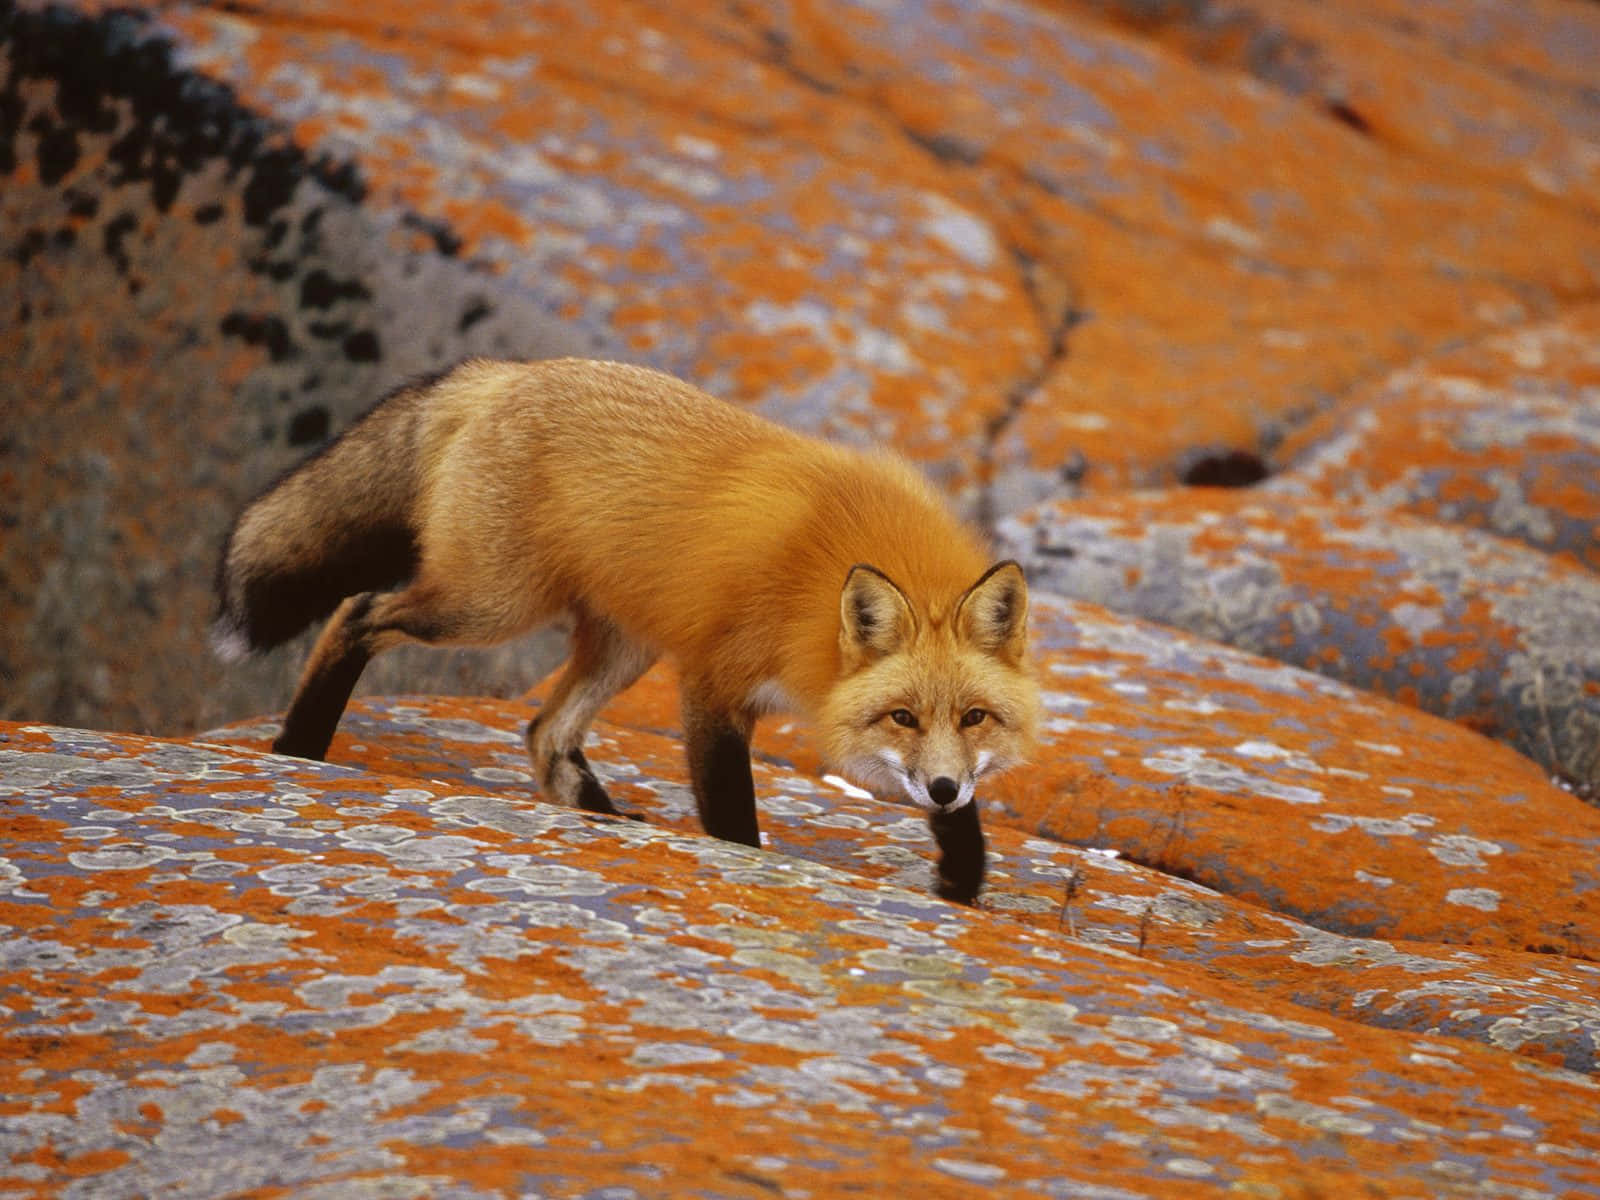 A curious fox explores the autumn foliage